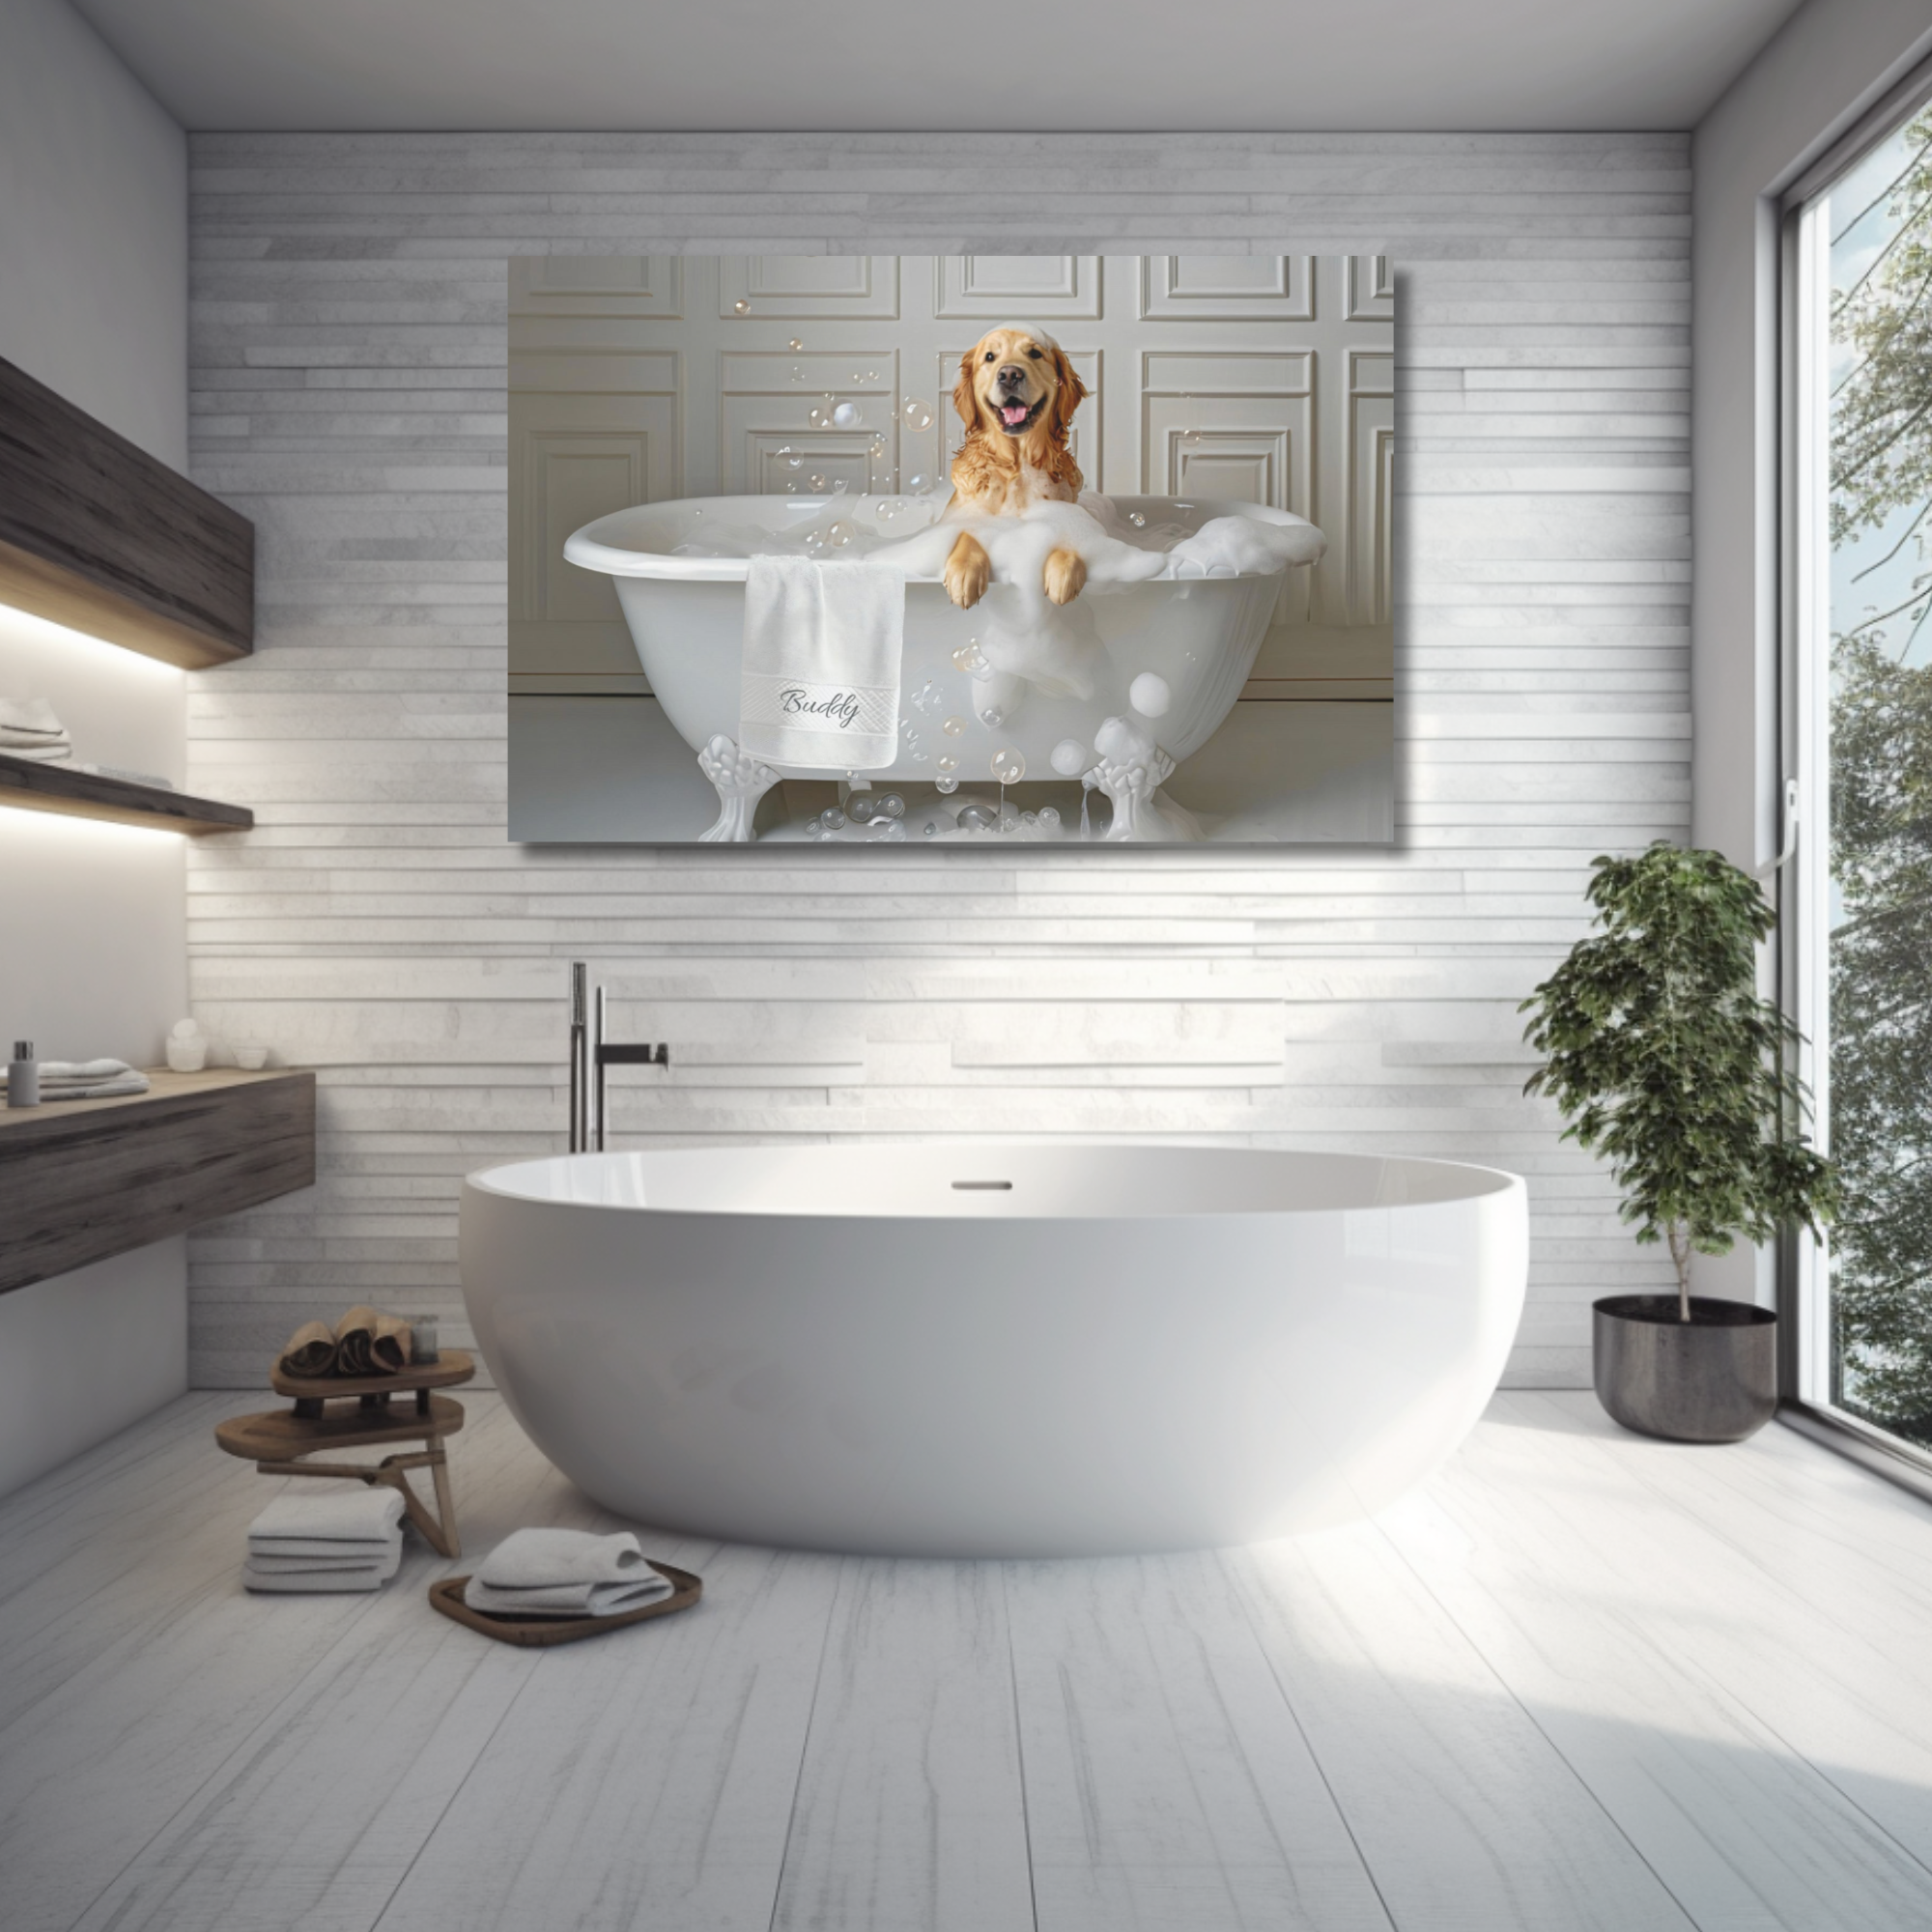 Golden Retriever Wall Art: Personalized Bathtub Print for Dog Lovers